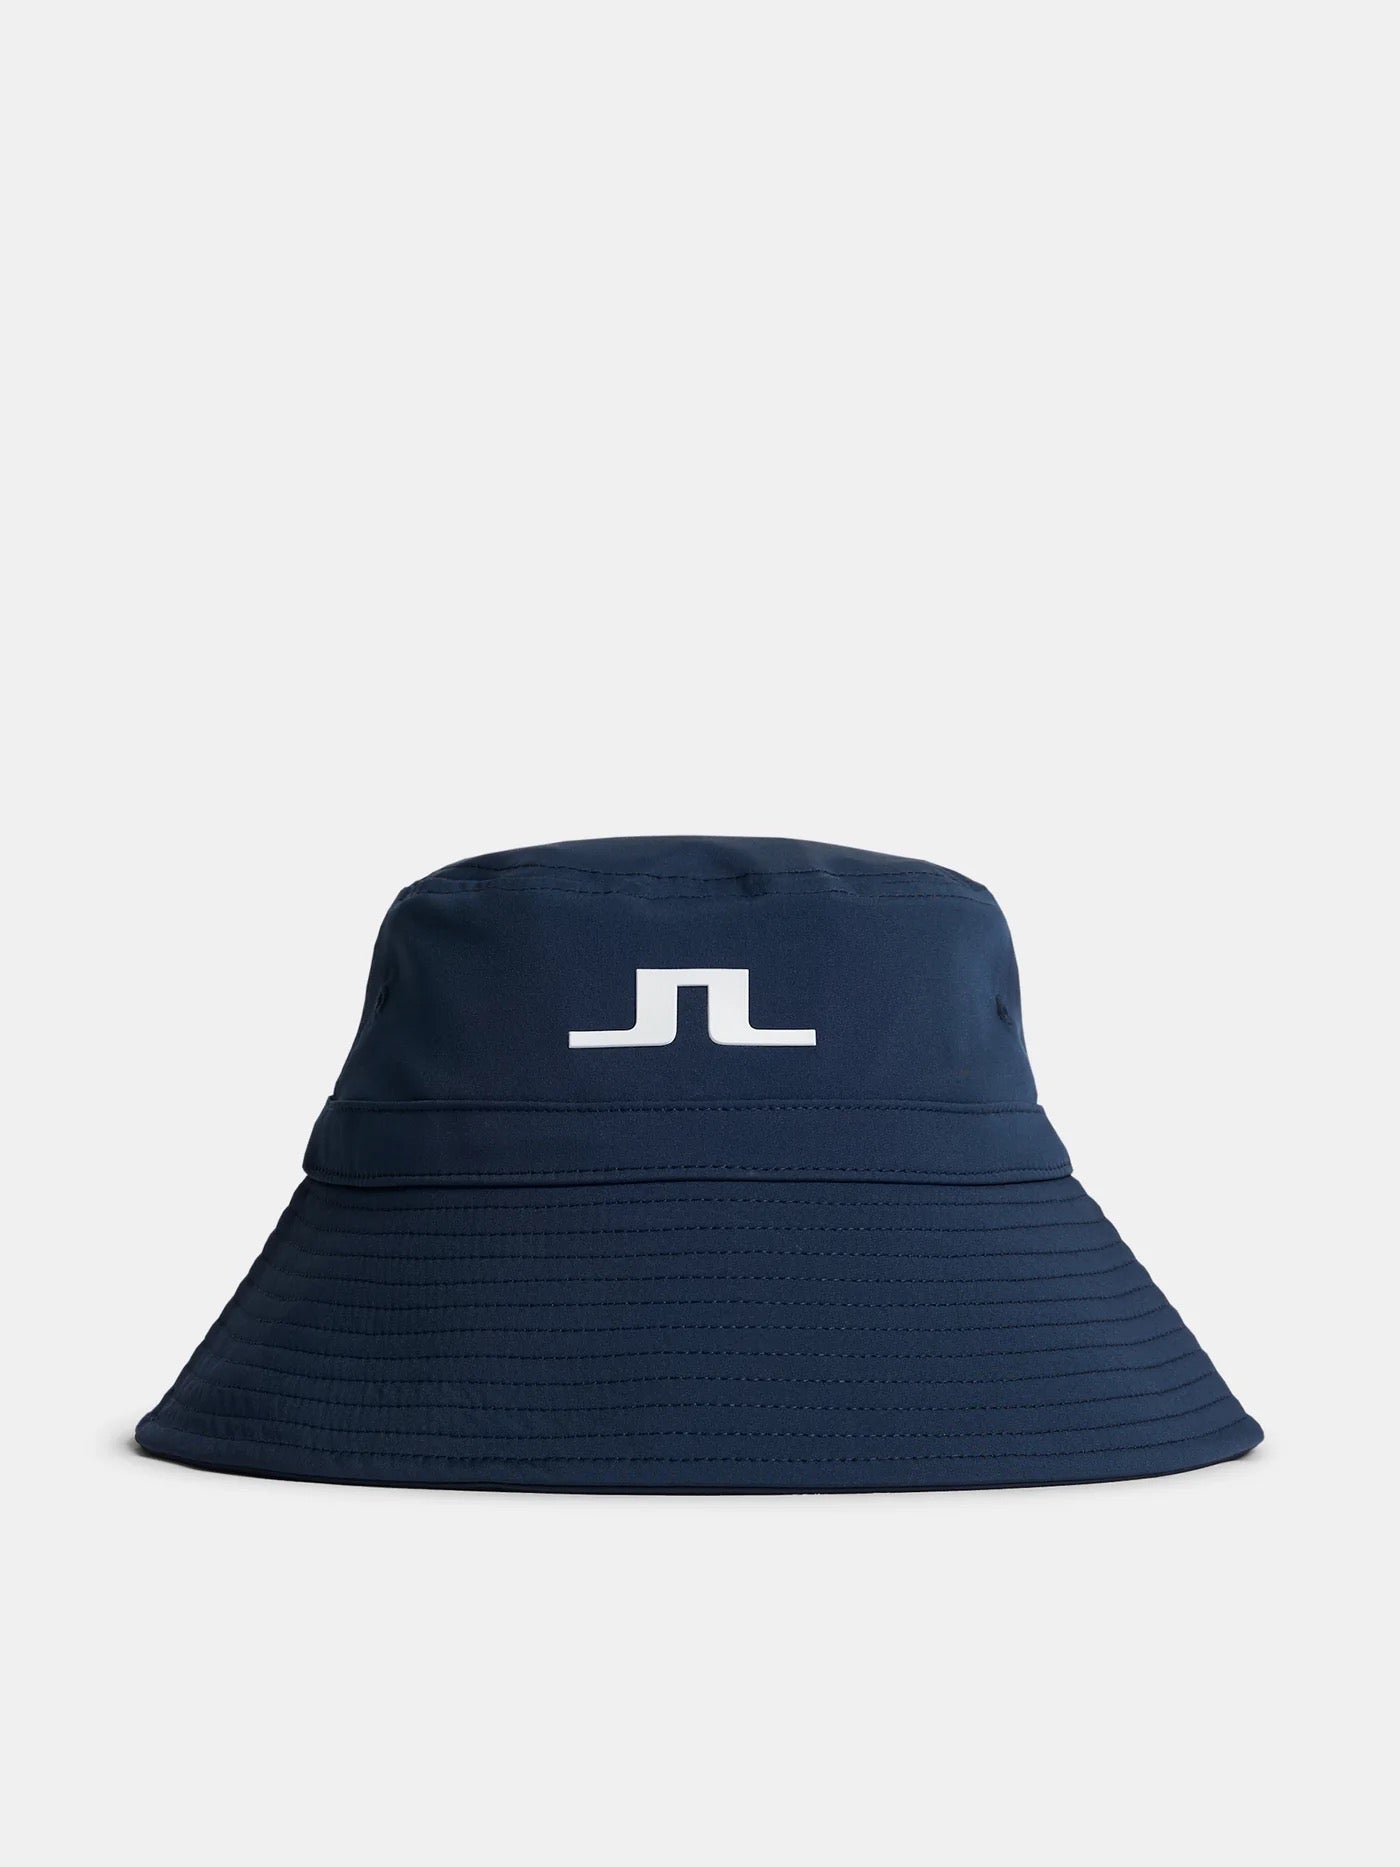 J Lindeberg Women's SIRI BUCKET HAT - 2 Colors